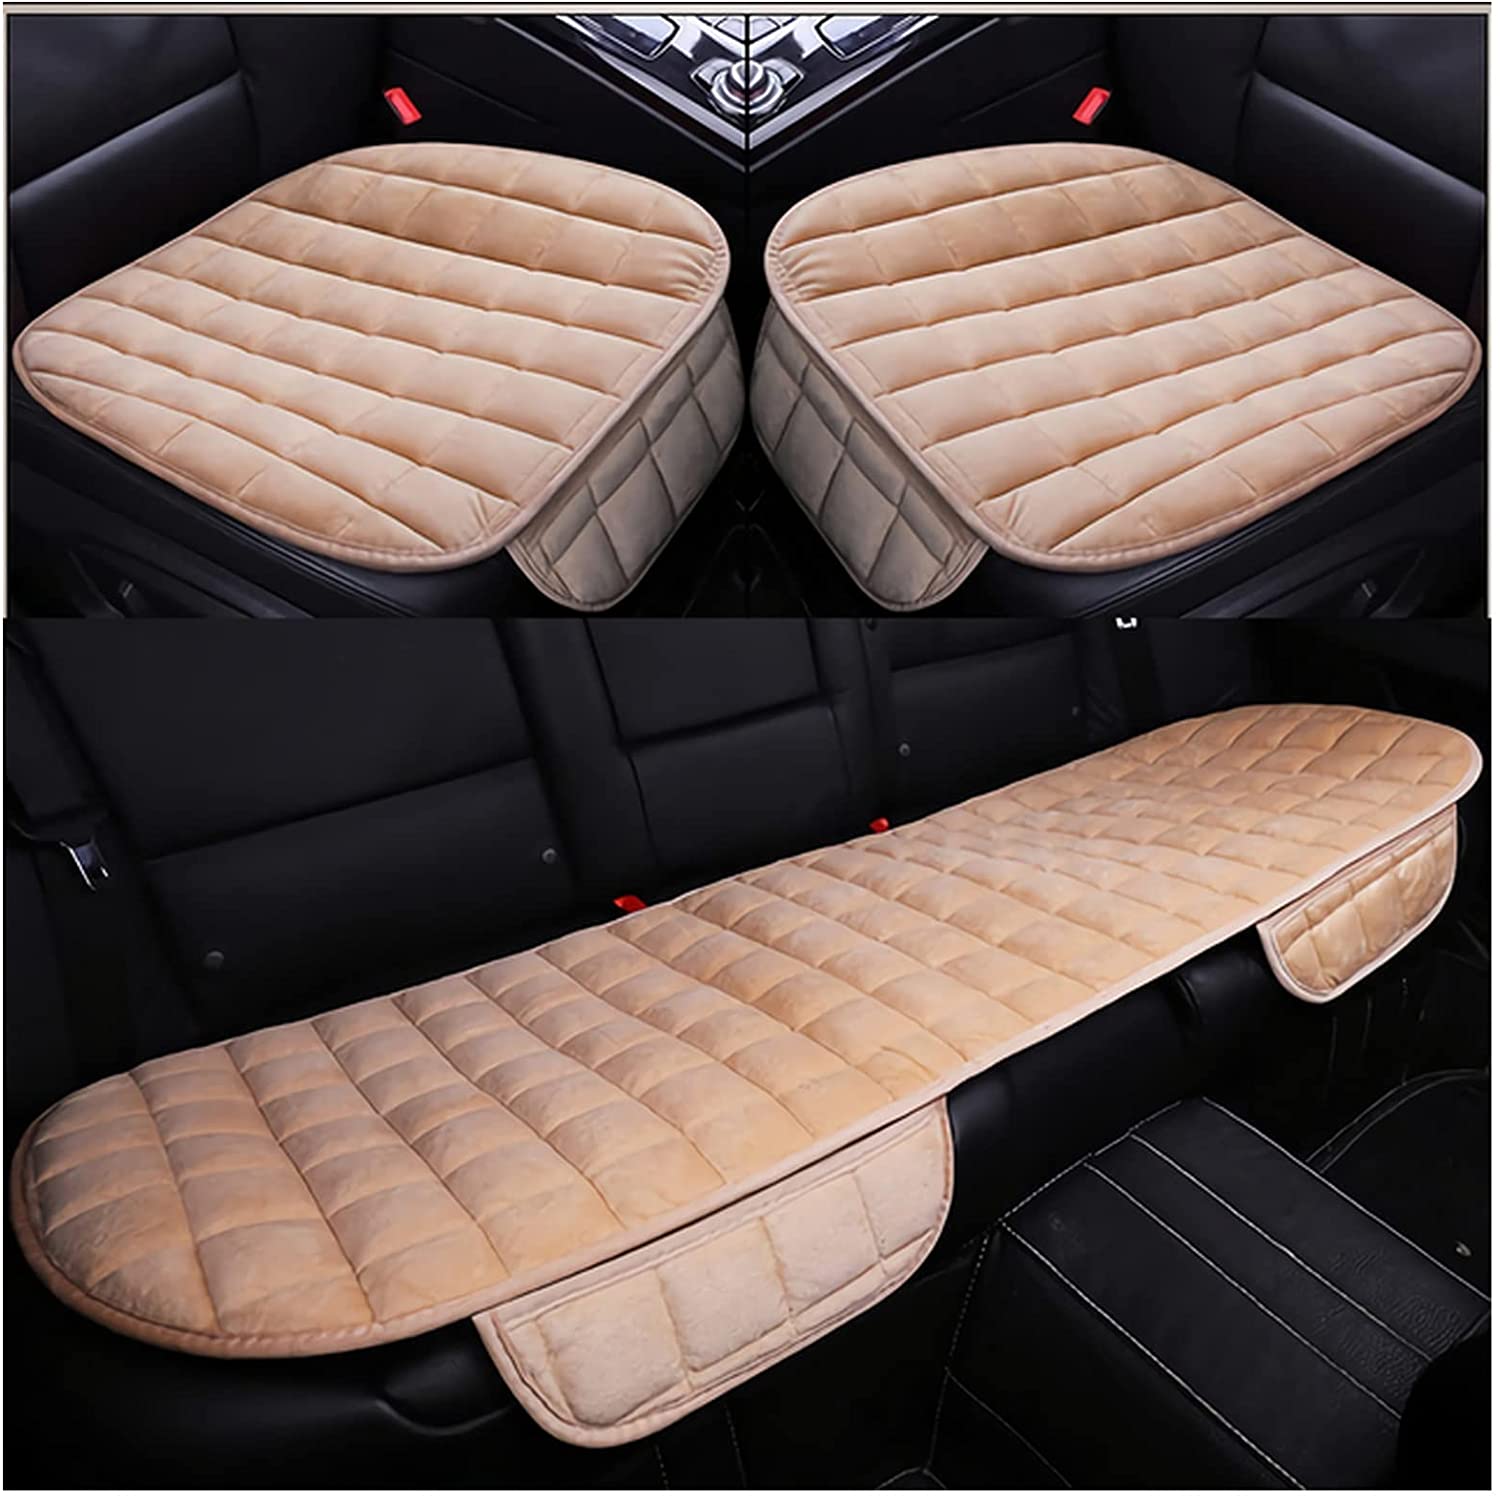 bamutech Seat Cushion Car Seat Cover Fit Truck SUV Van Front Rear Flake Cloth Cushion Non-Slip Winter Car Protector Mat Pad Keep Warm Universal Seat Cushion Chair (Size: Beige 3pcs)